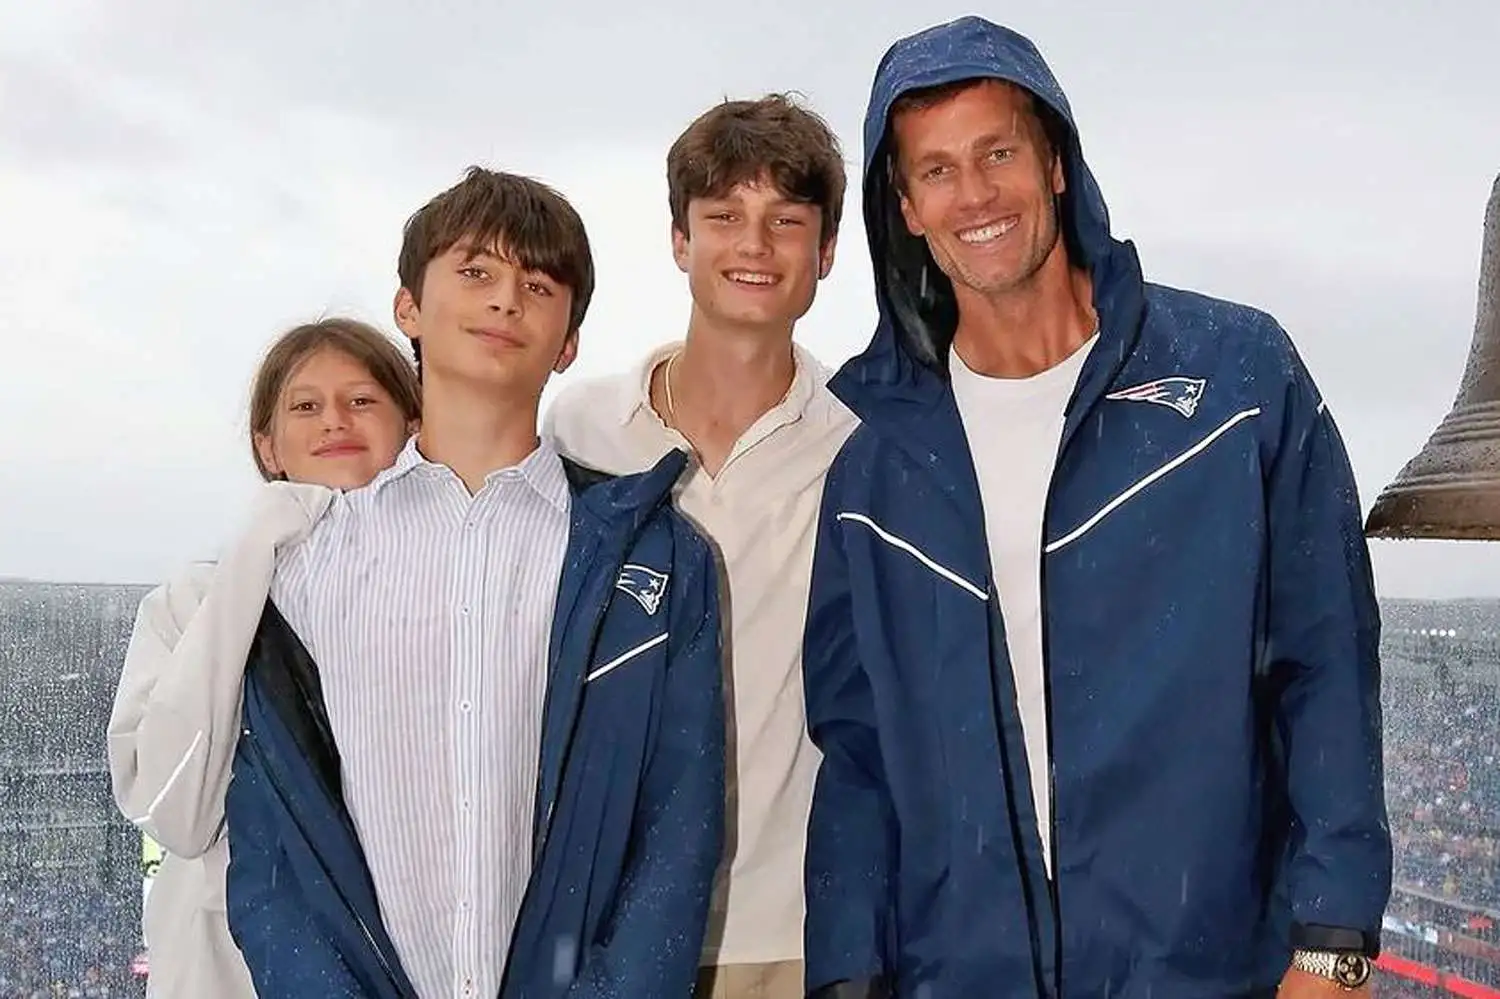 Tom Brady Kids: All About Jack, Vivian And Benjamin Brady